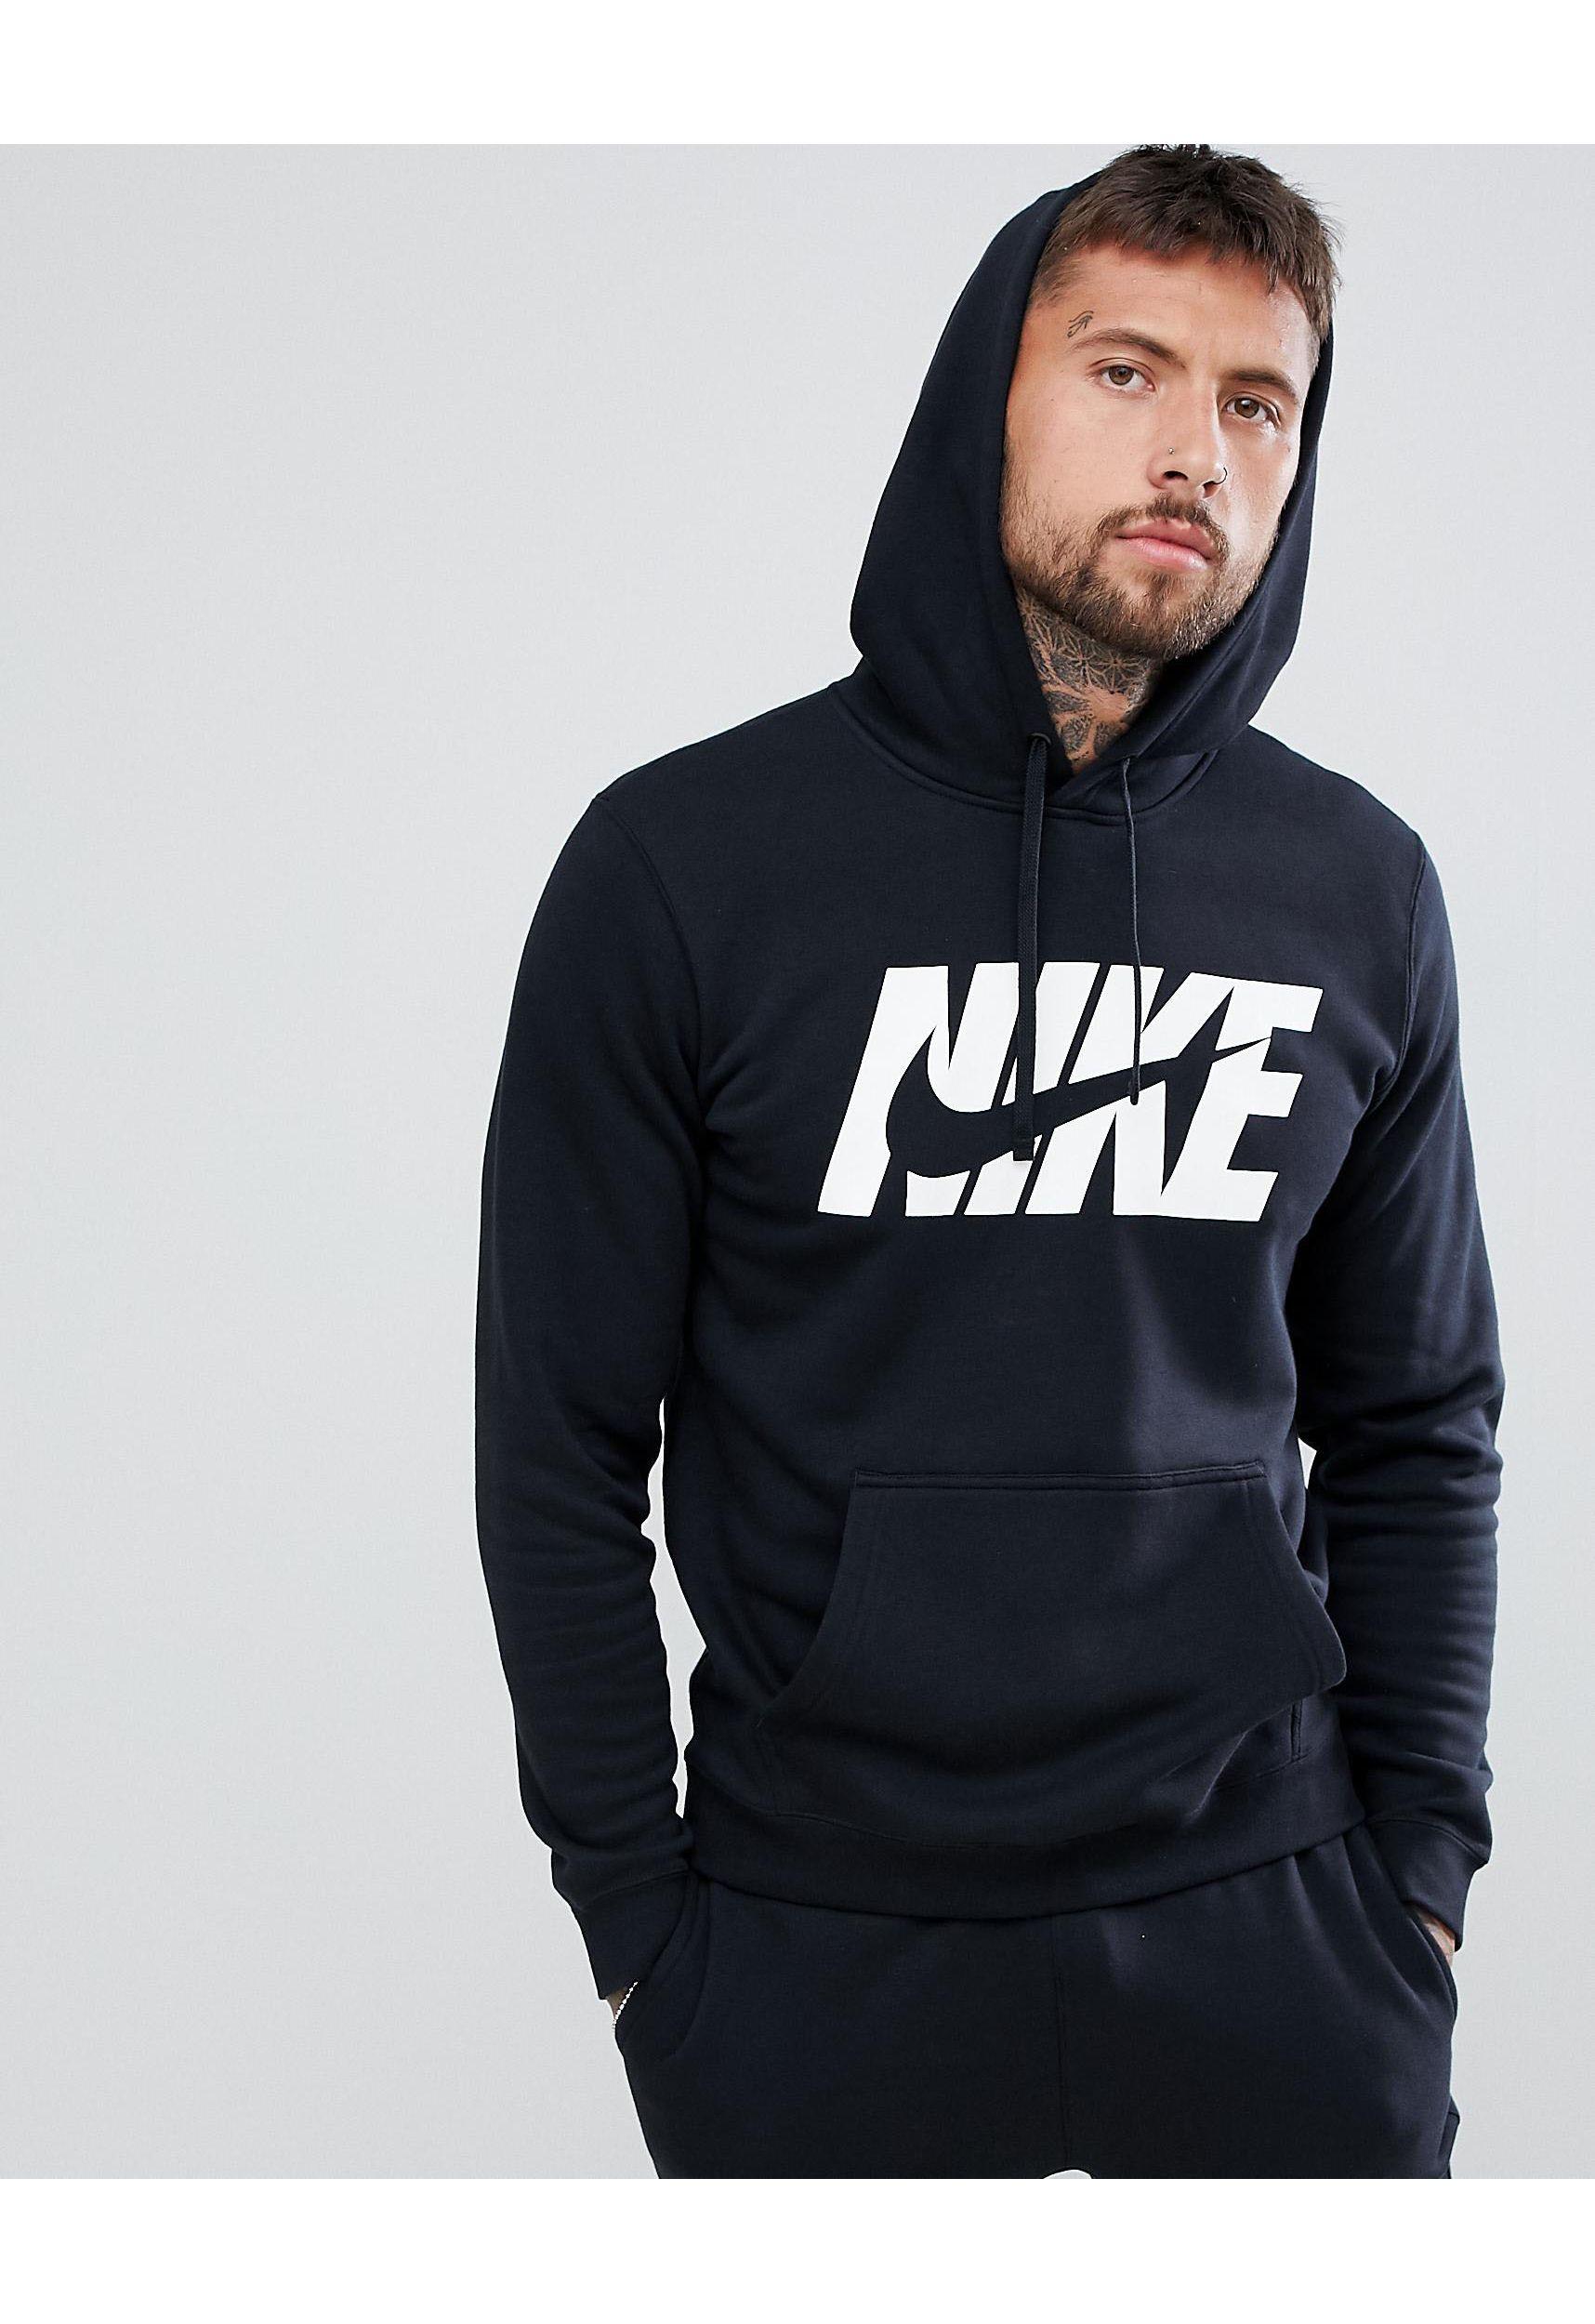 Nike Fleece Graphic Tracksuit Set in Black for Men - Lyst